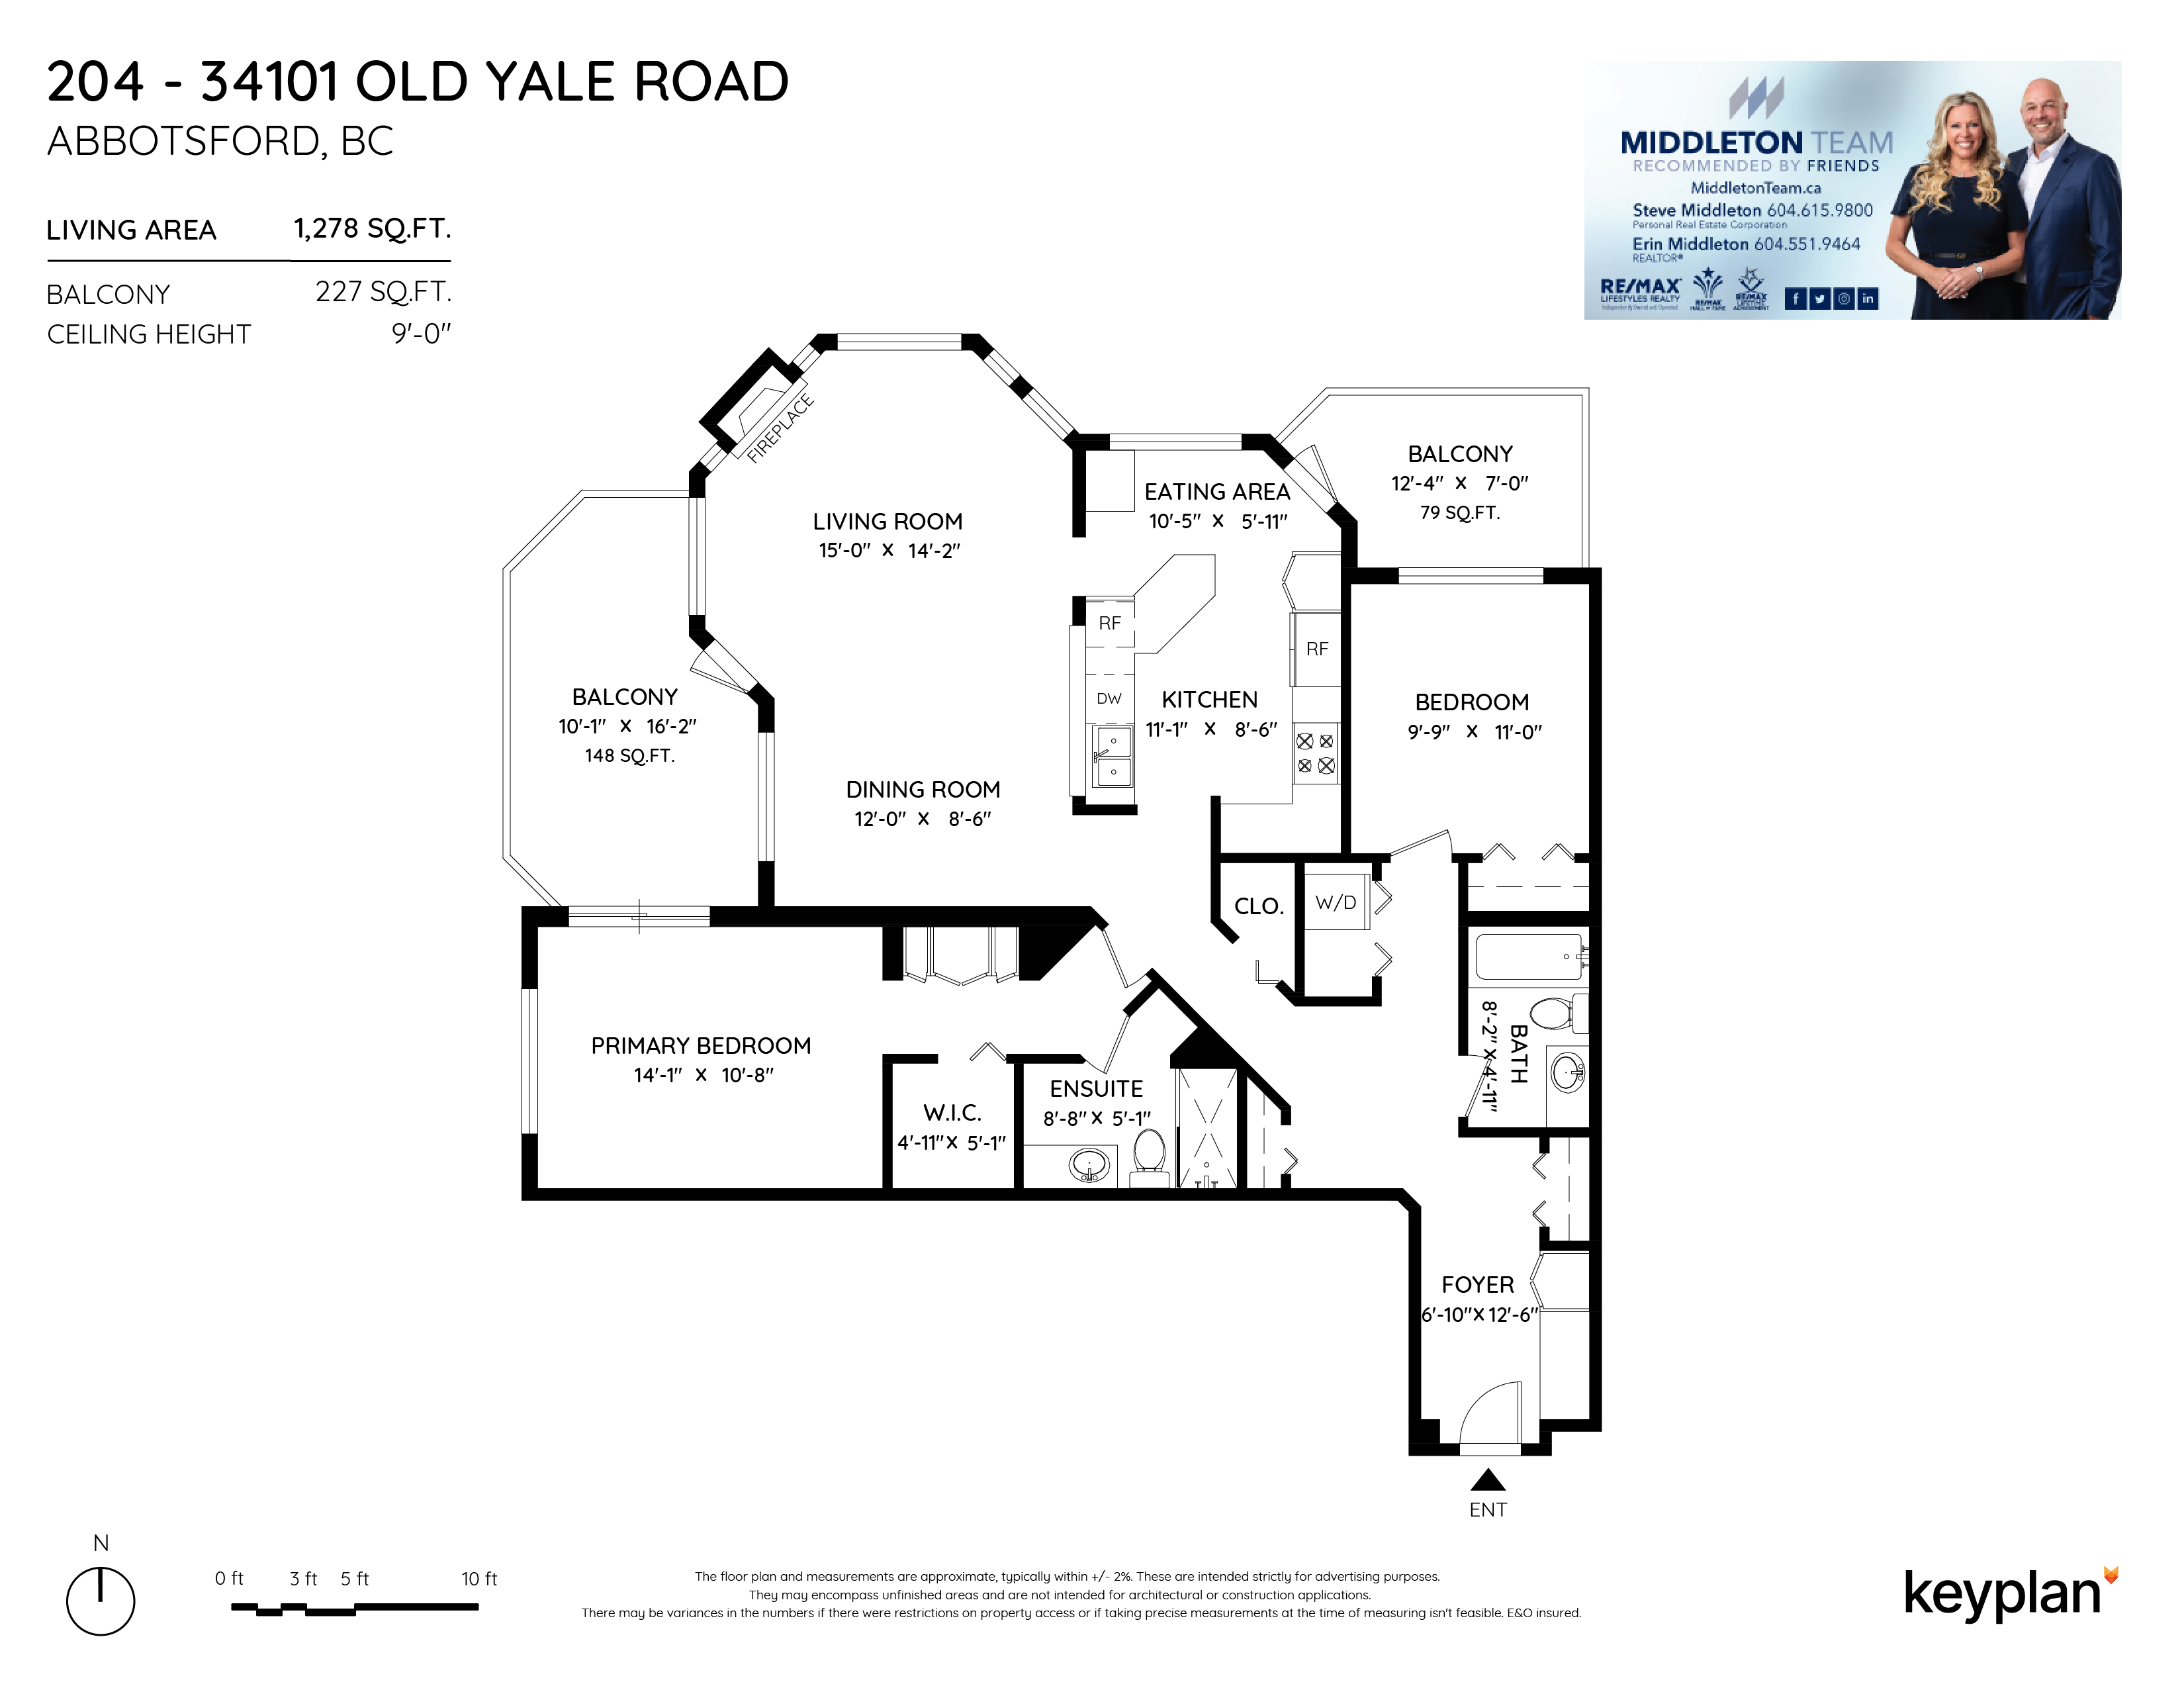 Steve & Erin Middleton - Unit 204 - 34101 Old Yale Road, Abbotsford, BC, Canada | Floor Plan 1